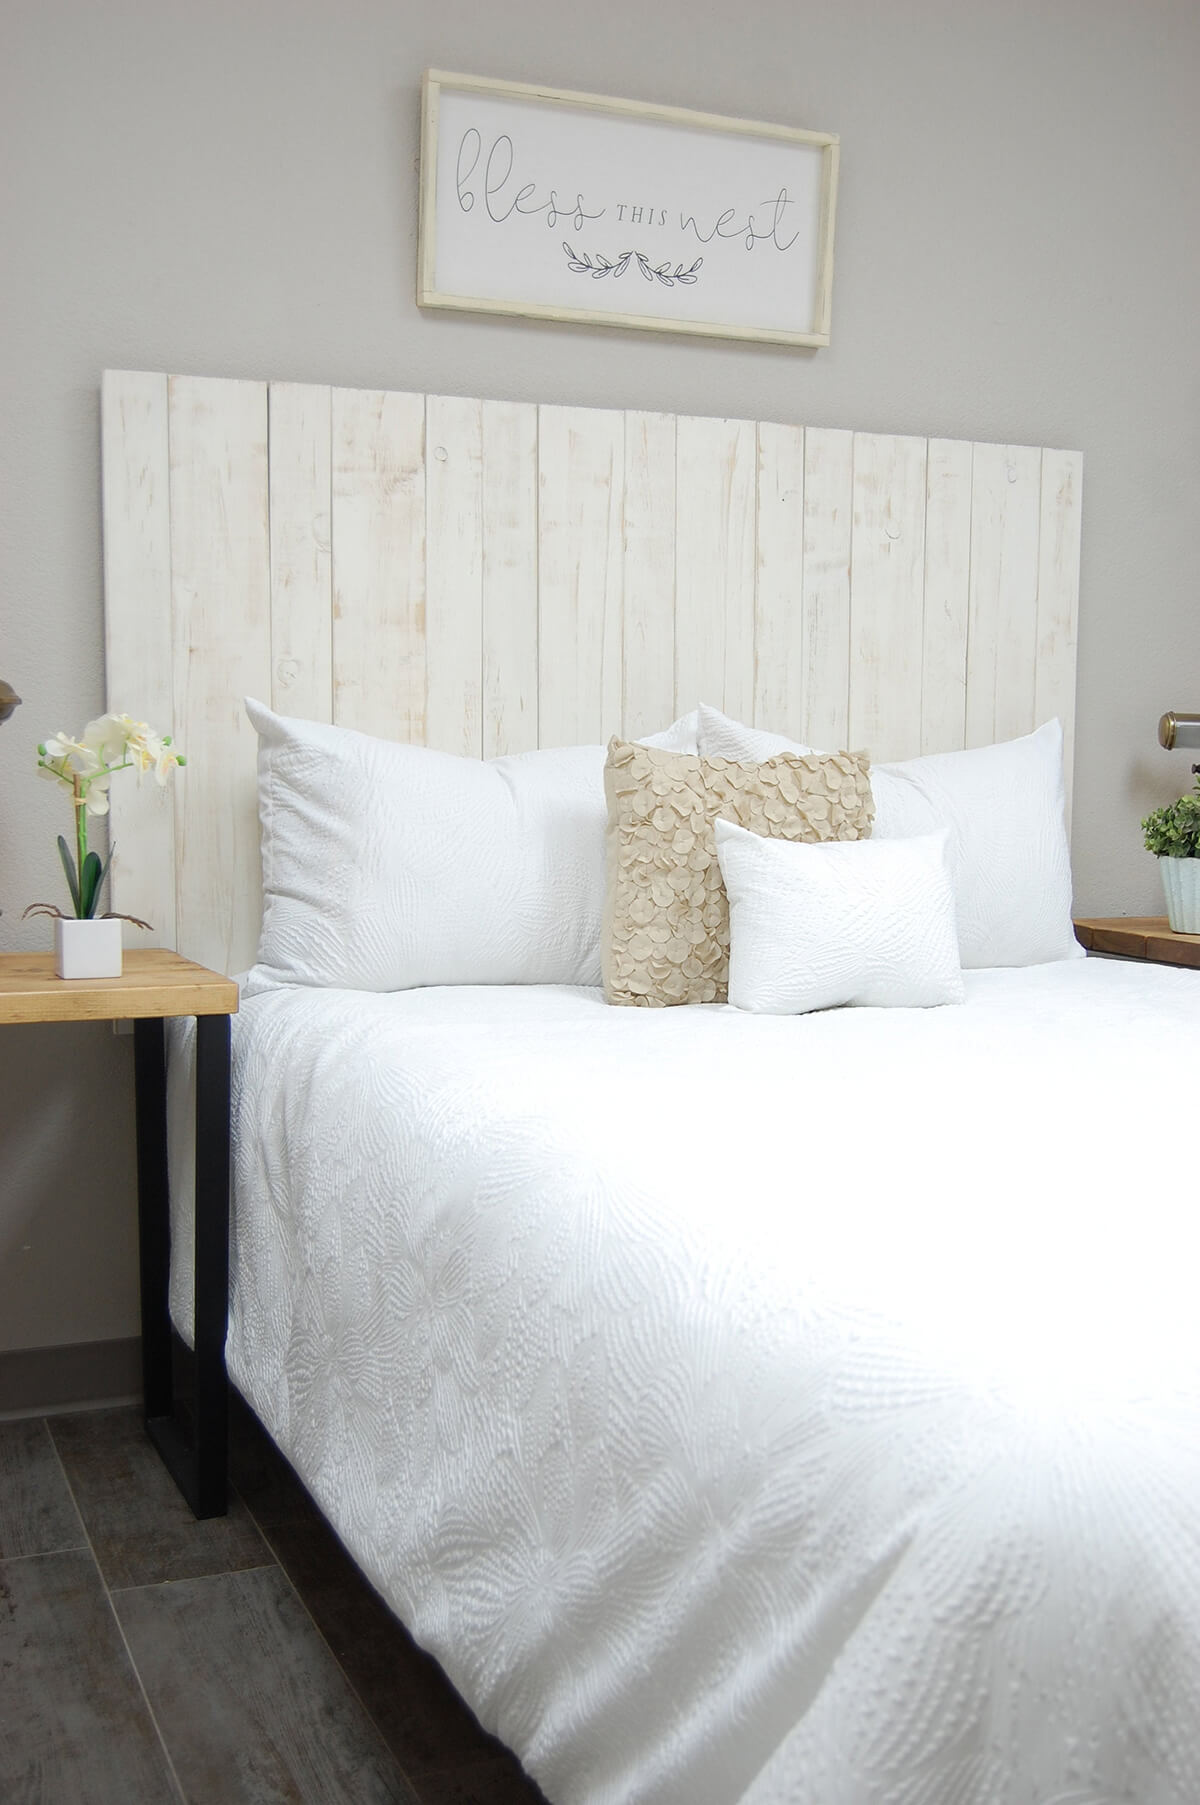 pallet headboard bed wood diy frame whitewashed timeless designs bedroom homebnc